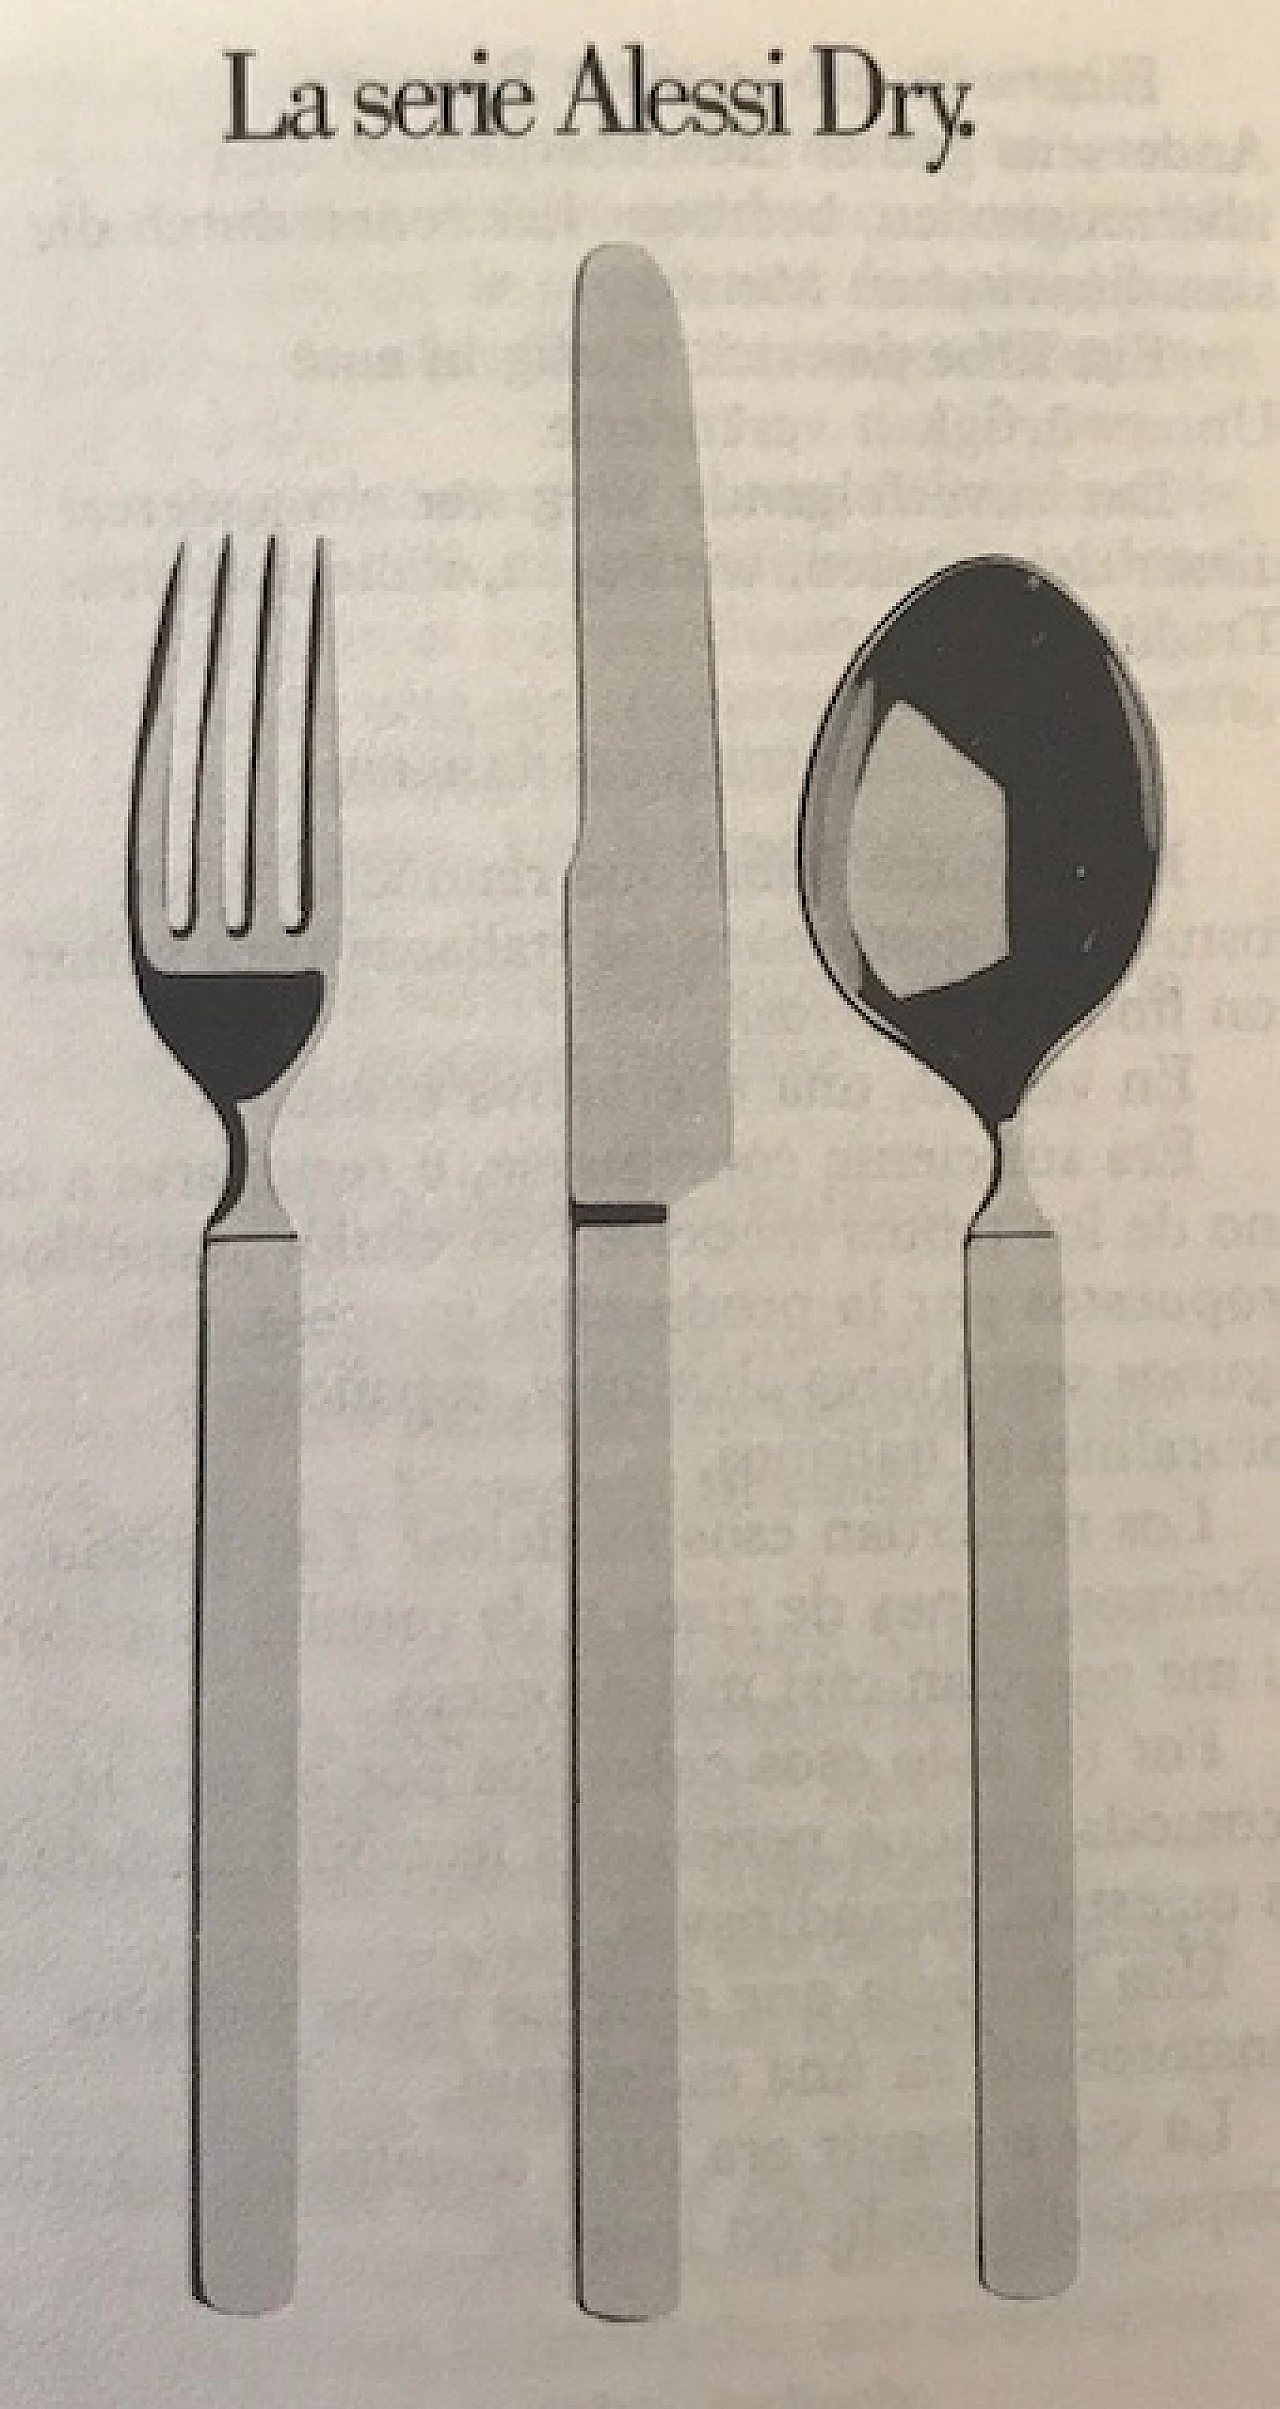 Cutlery from Pier Giacomo Castiglioni, "Dry" for Alessi 2